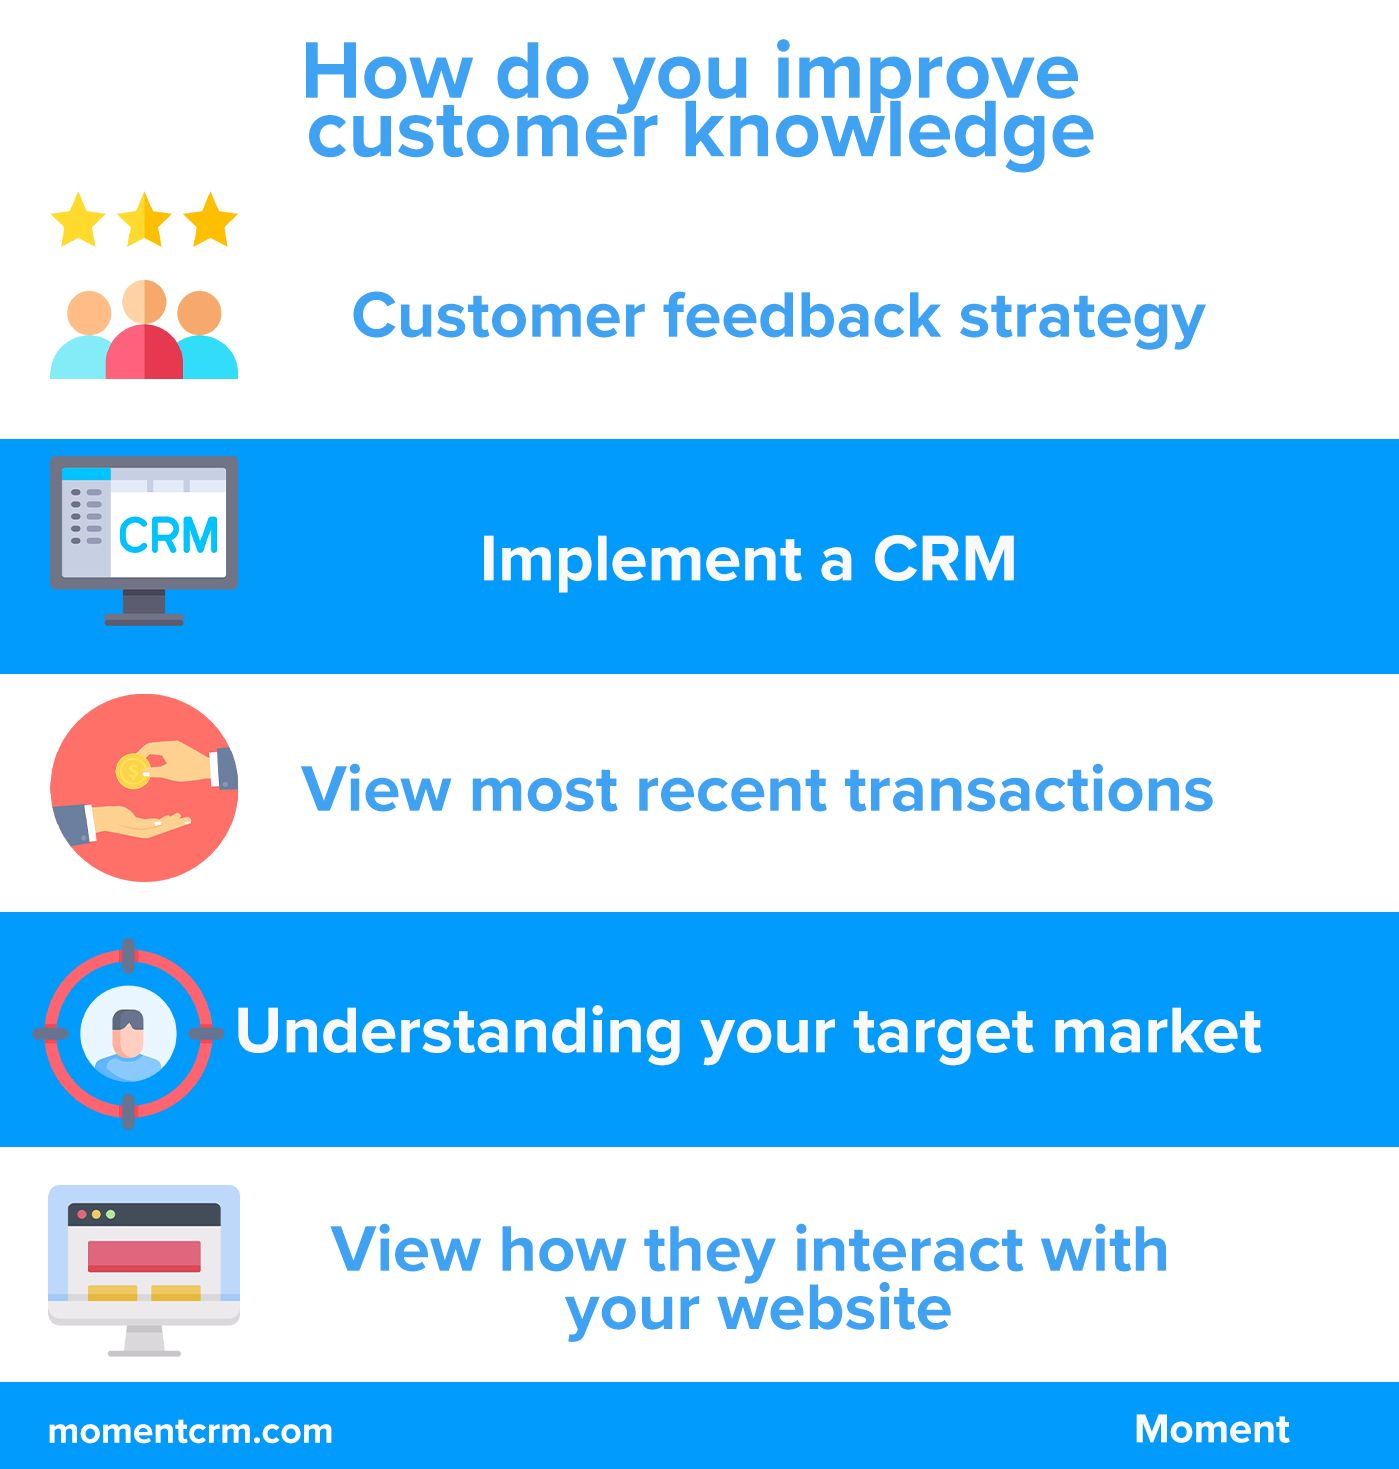 5 ways to improve customer knowledge